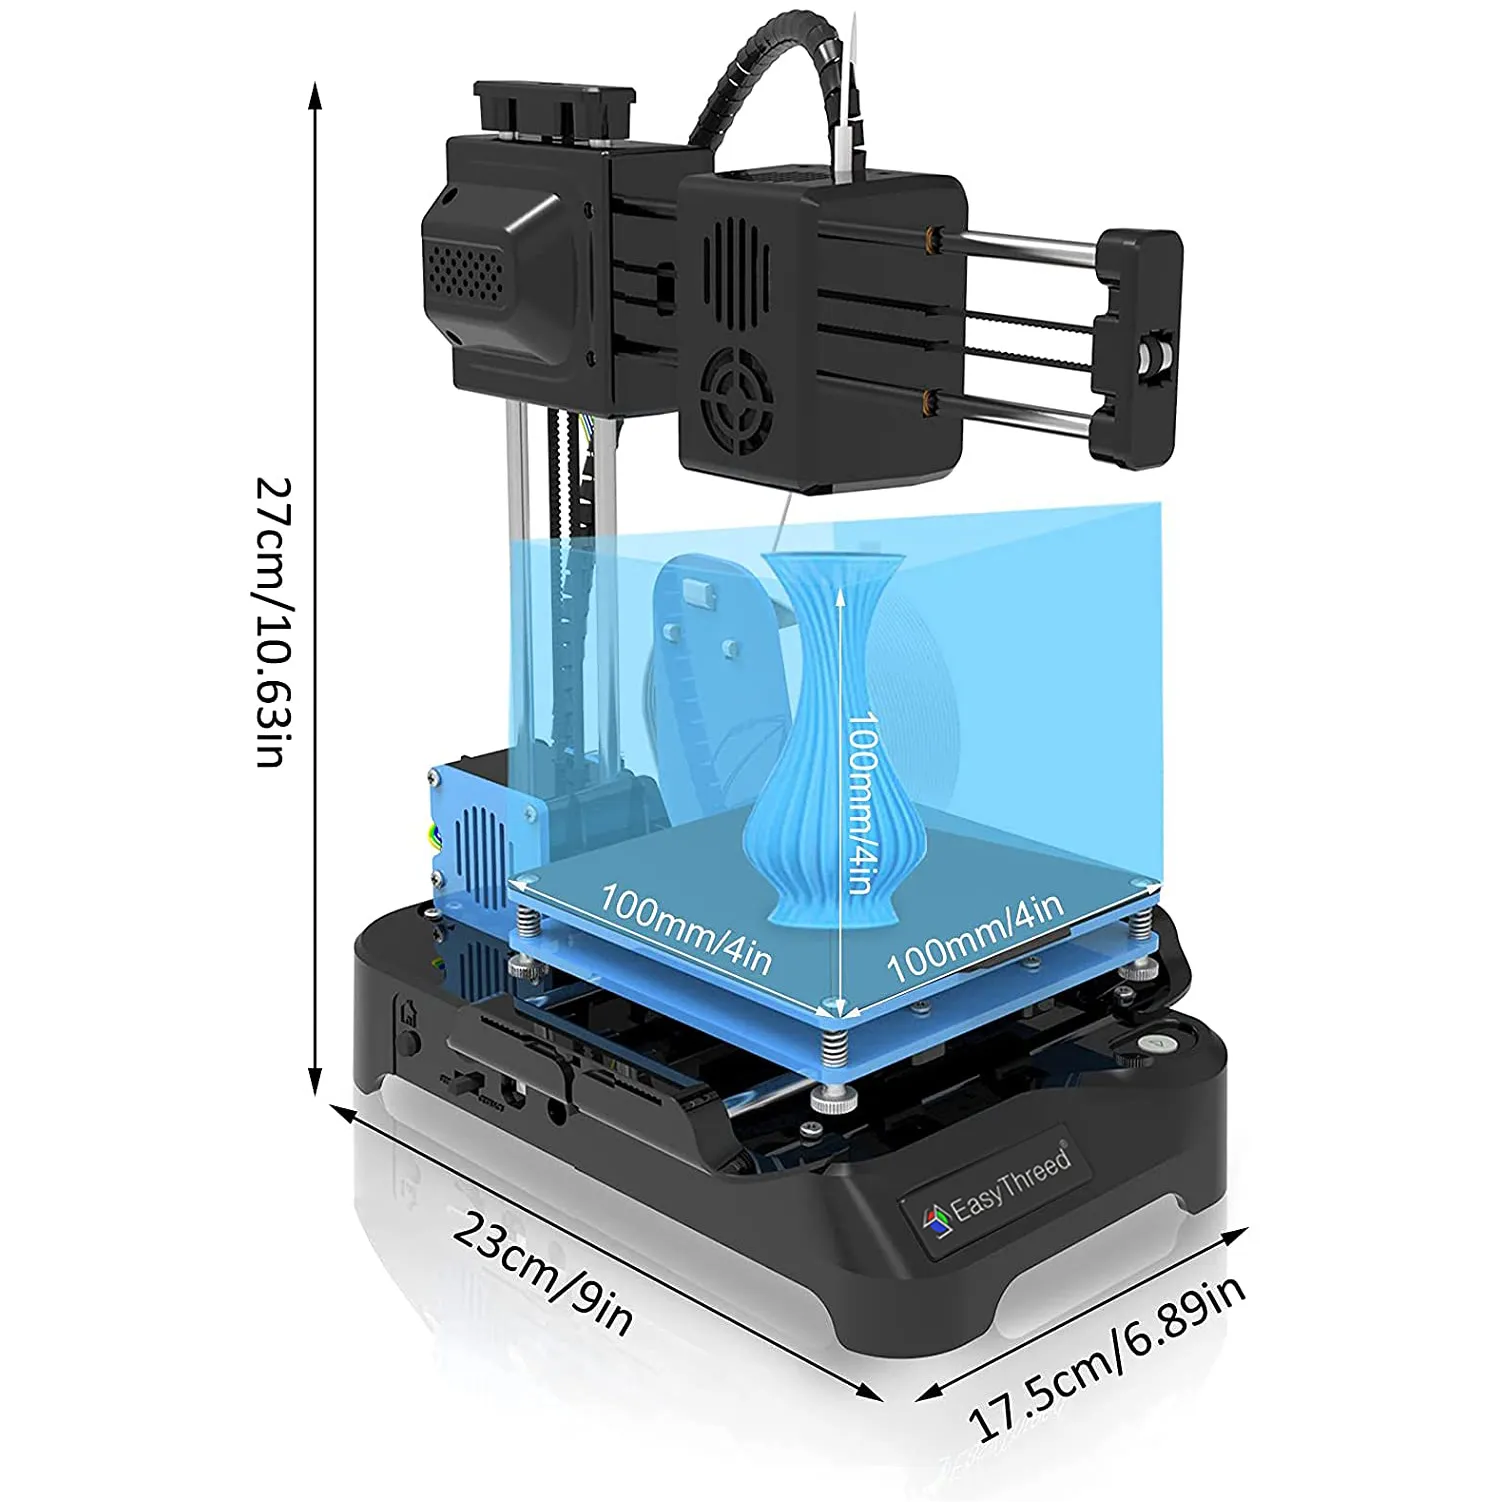 Easy Threed 3D Printer K7 – Small 3D Printer